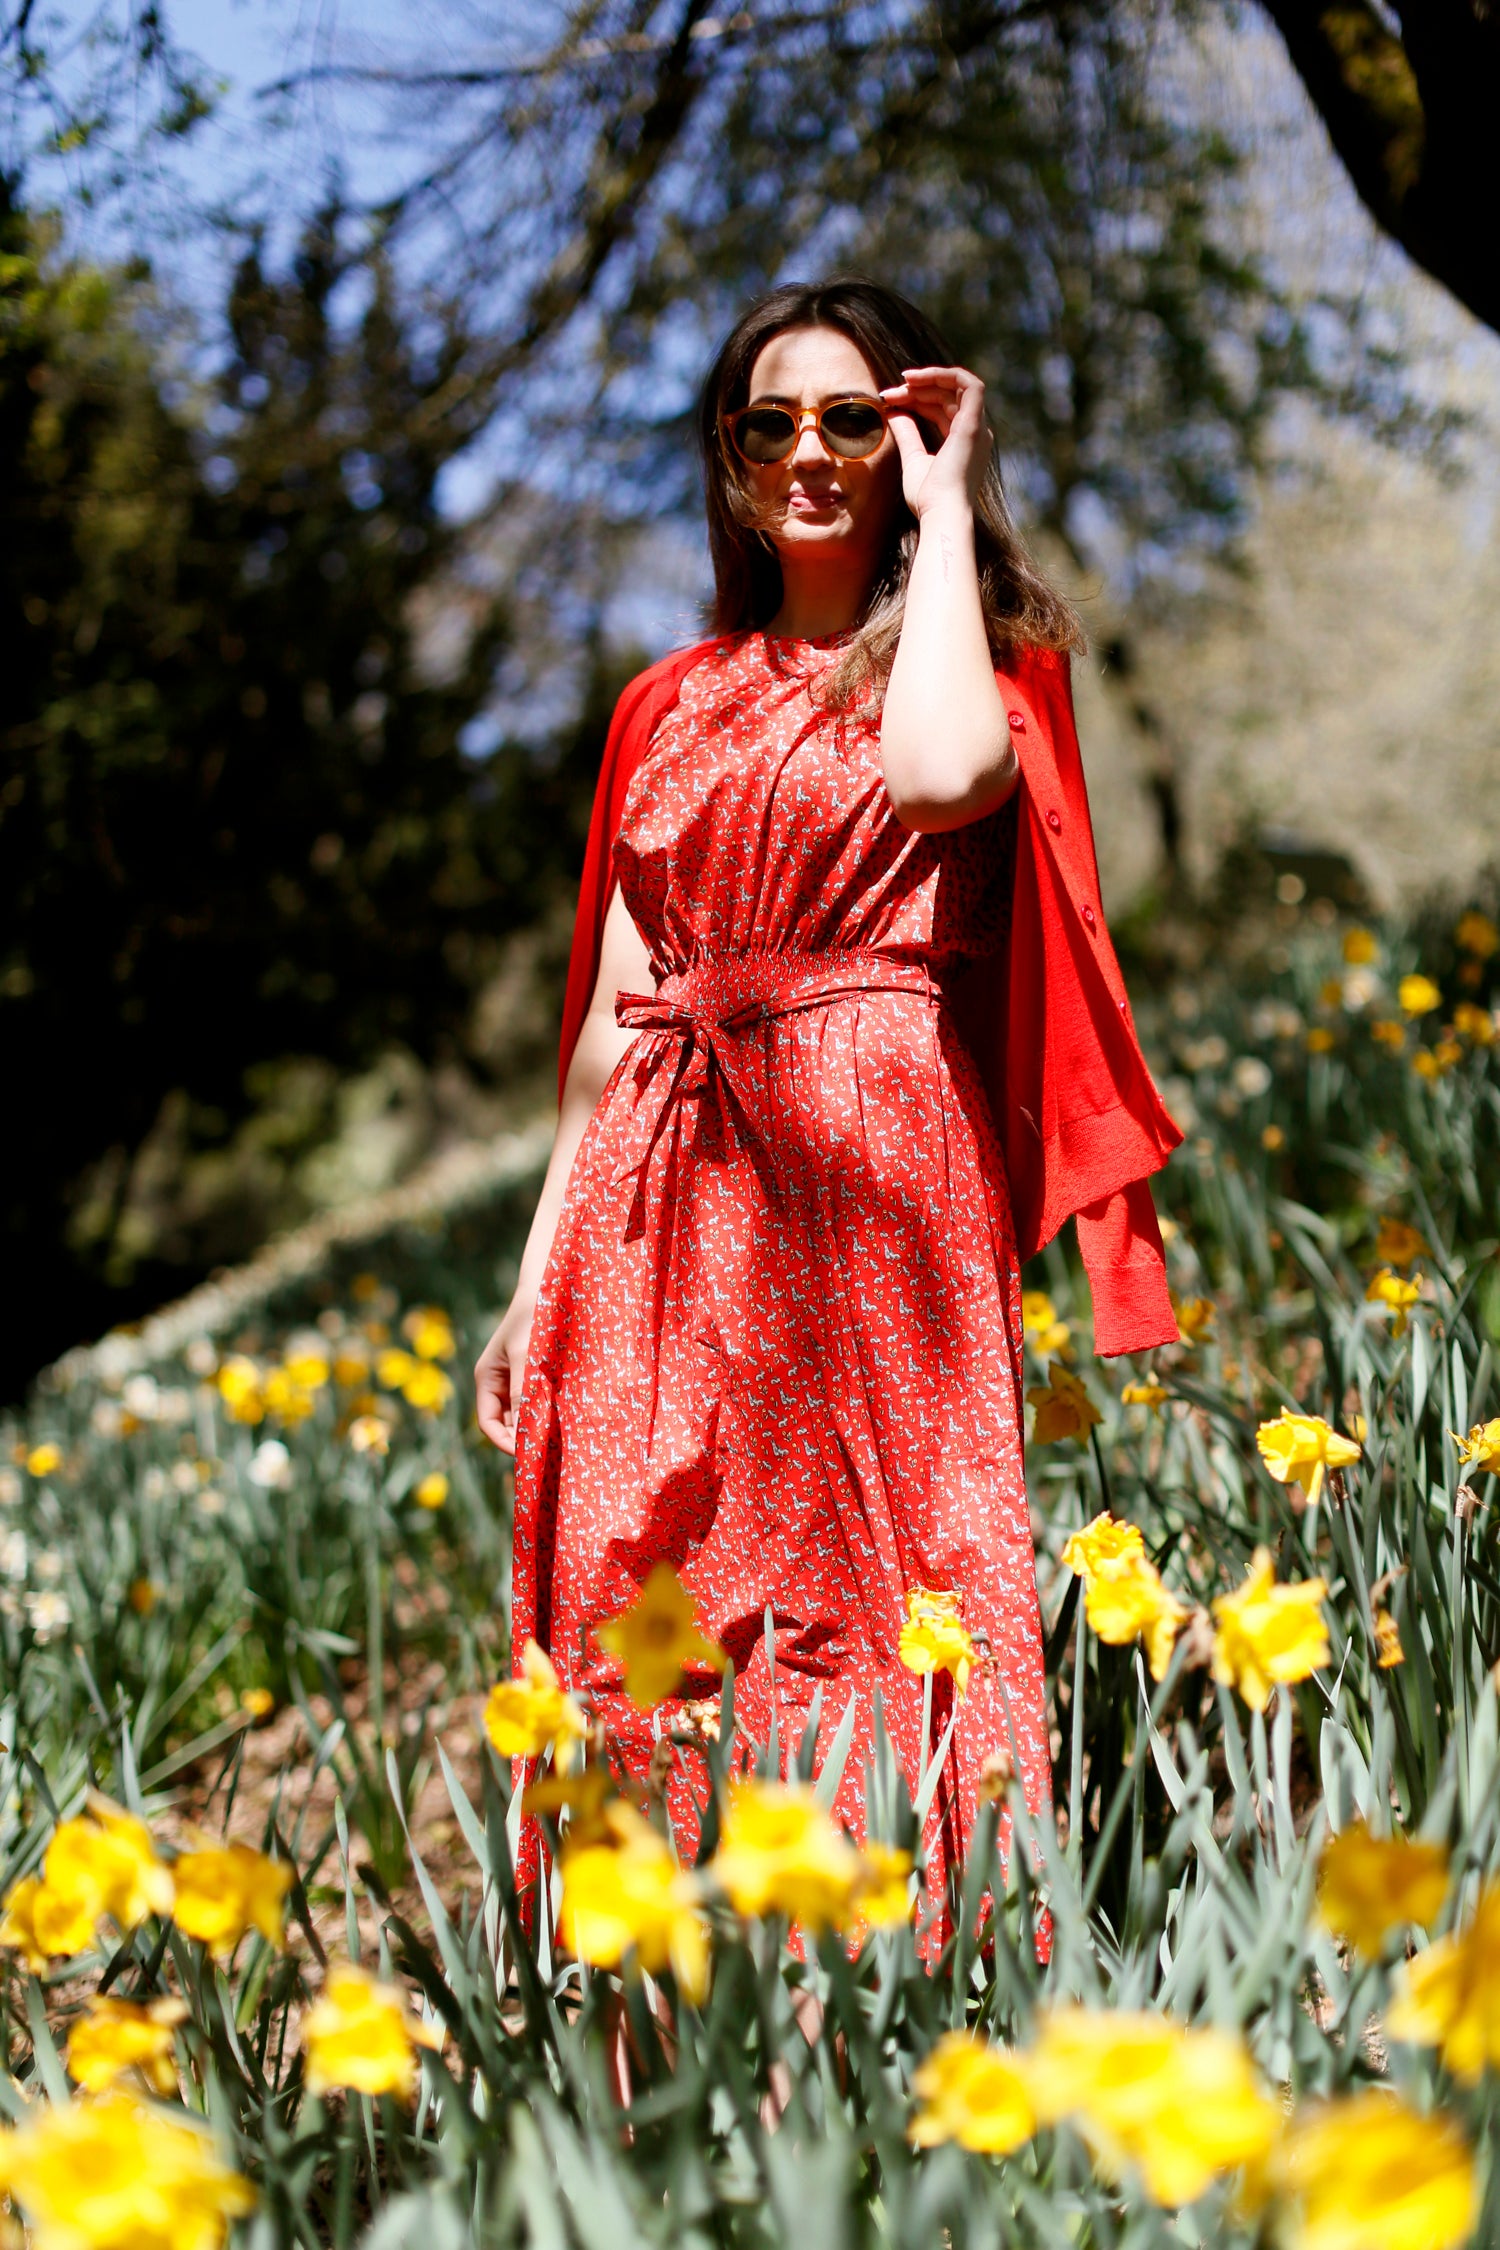 F&H Women's Bunny Sleeveless Smocked Dress Red